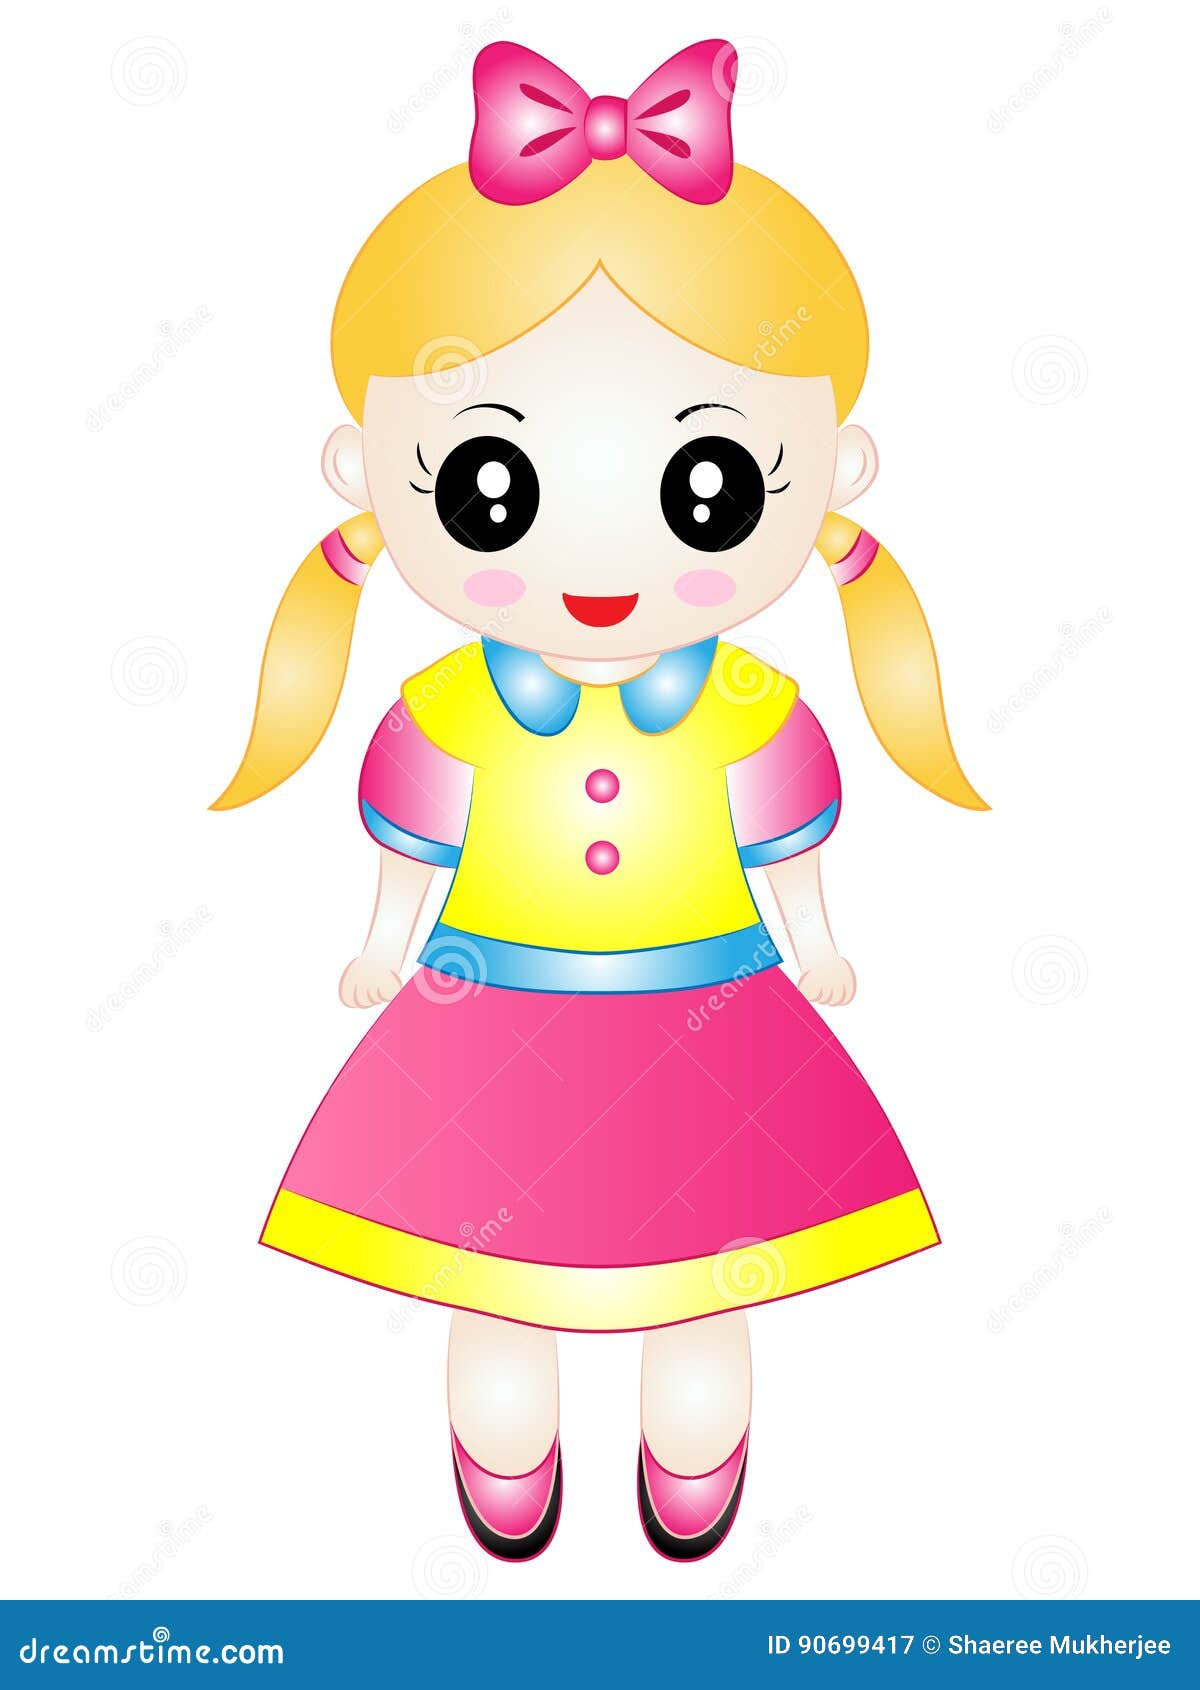 Cartoon Doll stock vector. Illustration of childhood - 90699417